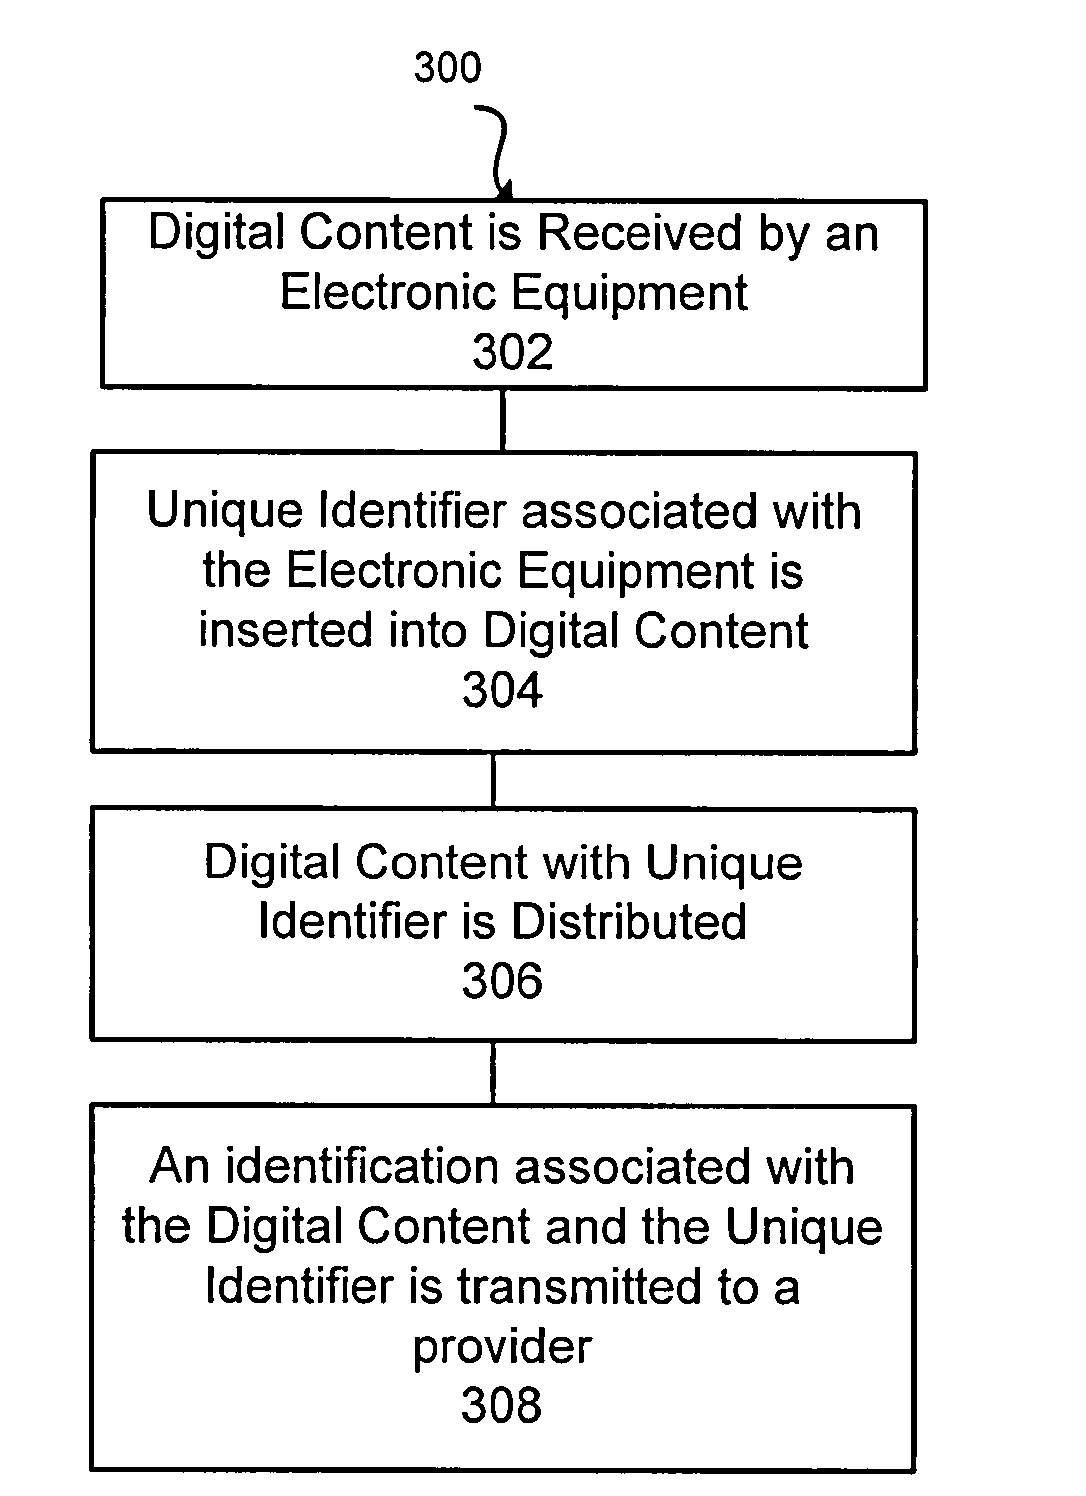 Multilevel distribution of digital content